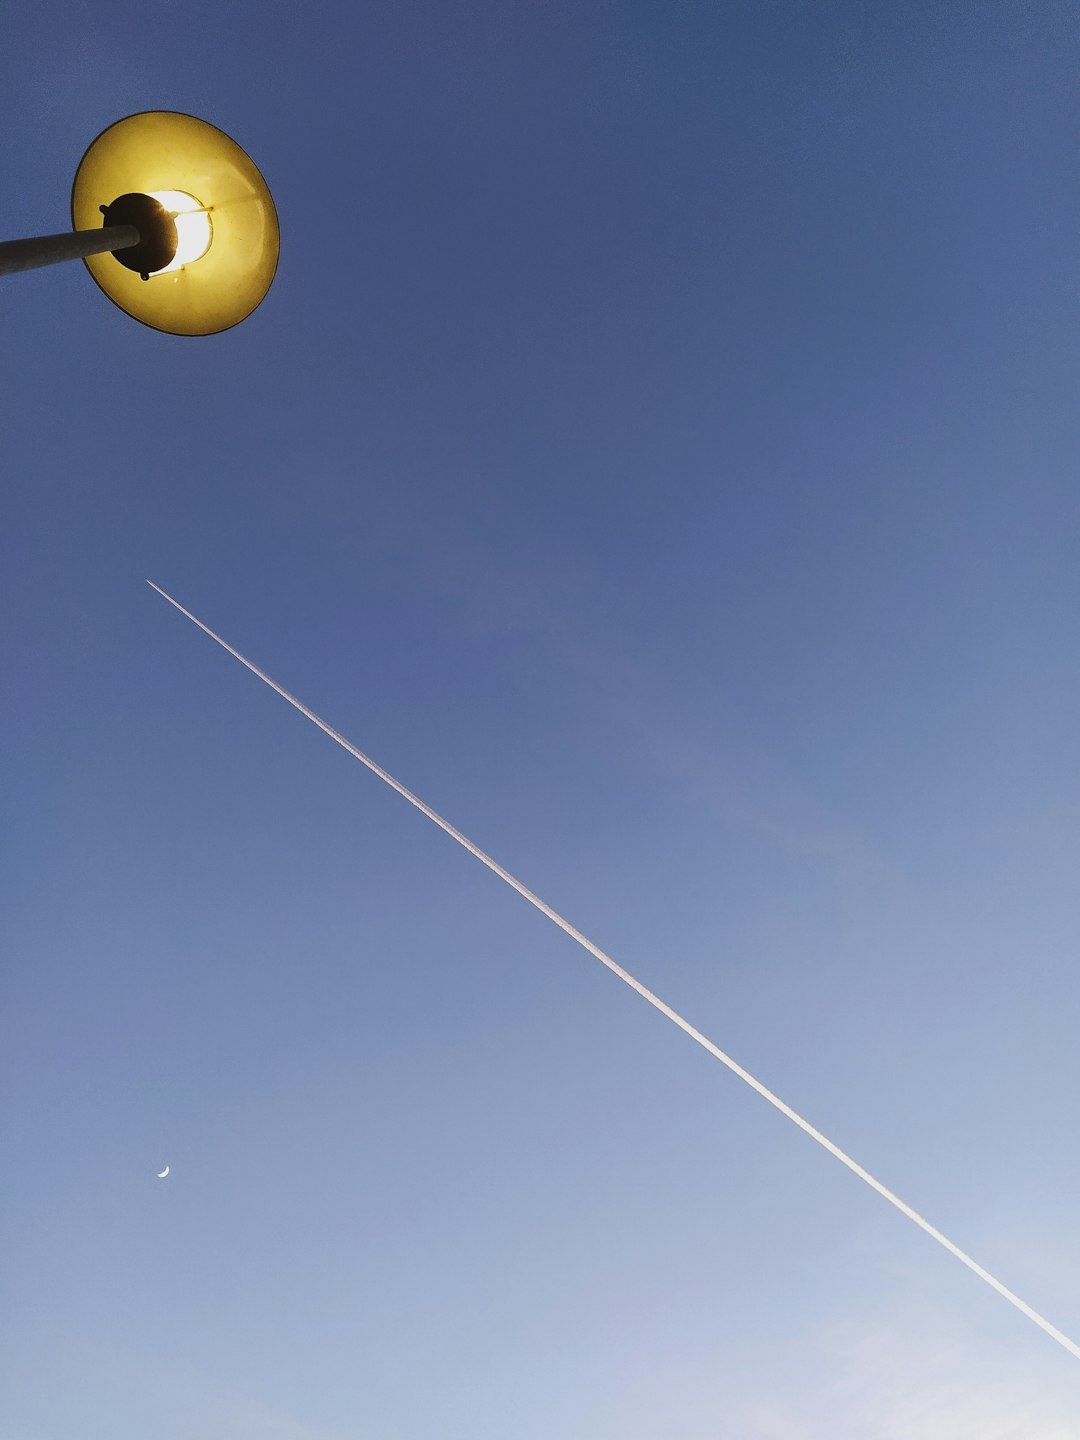 yellow light bulb under blue sky during daytime